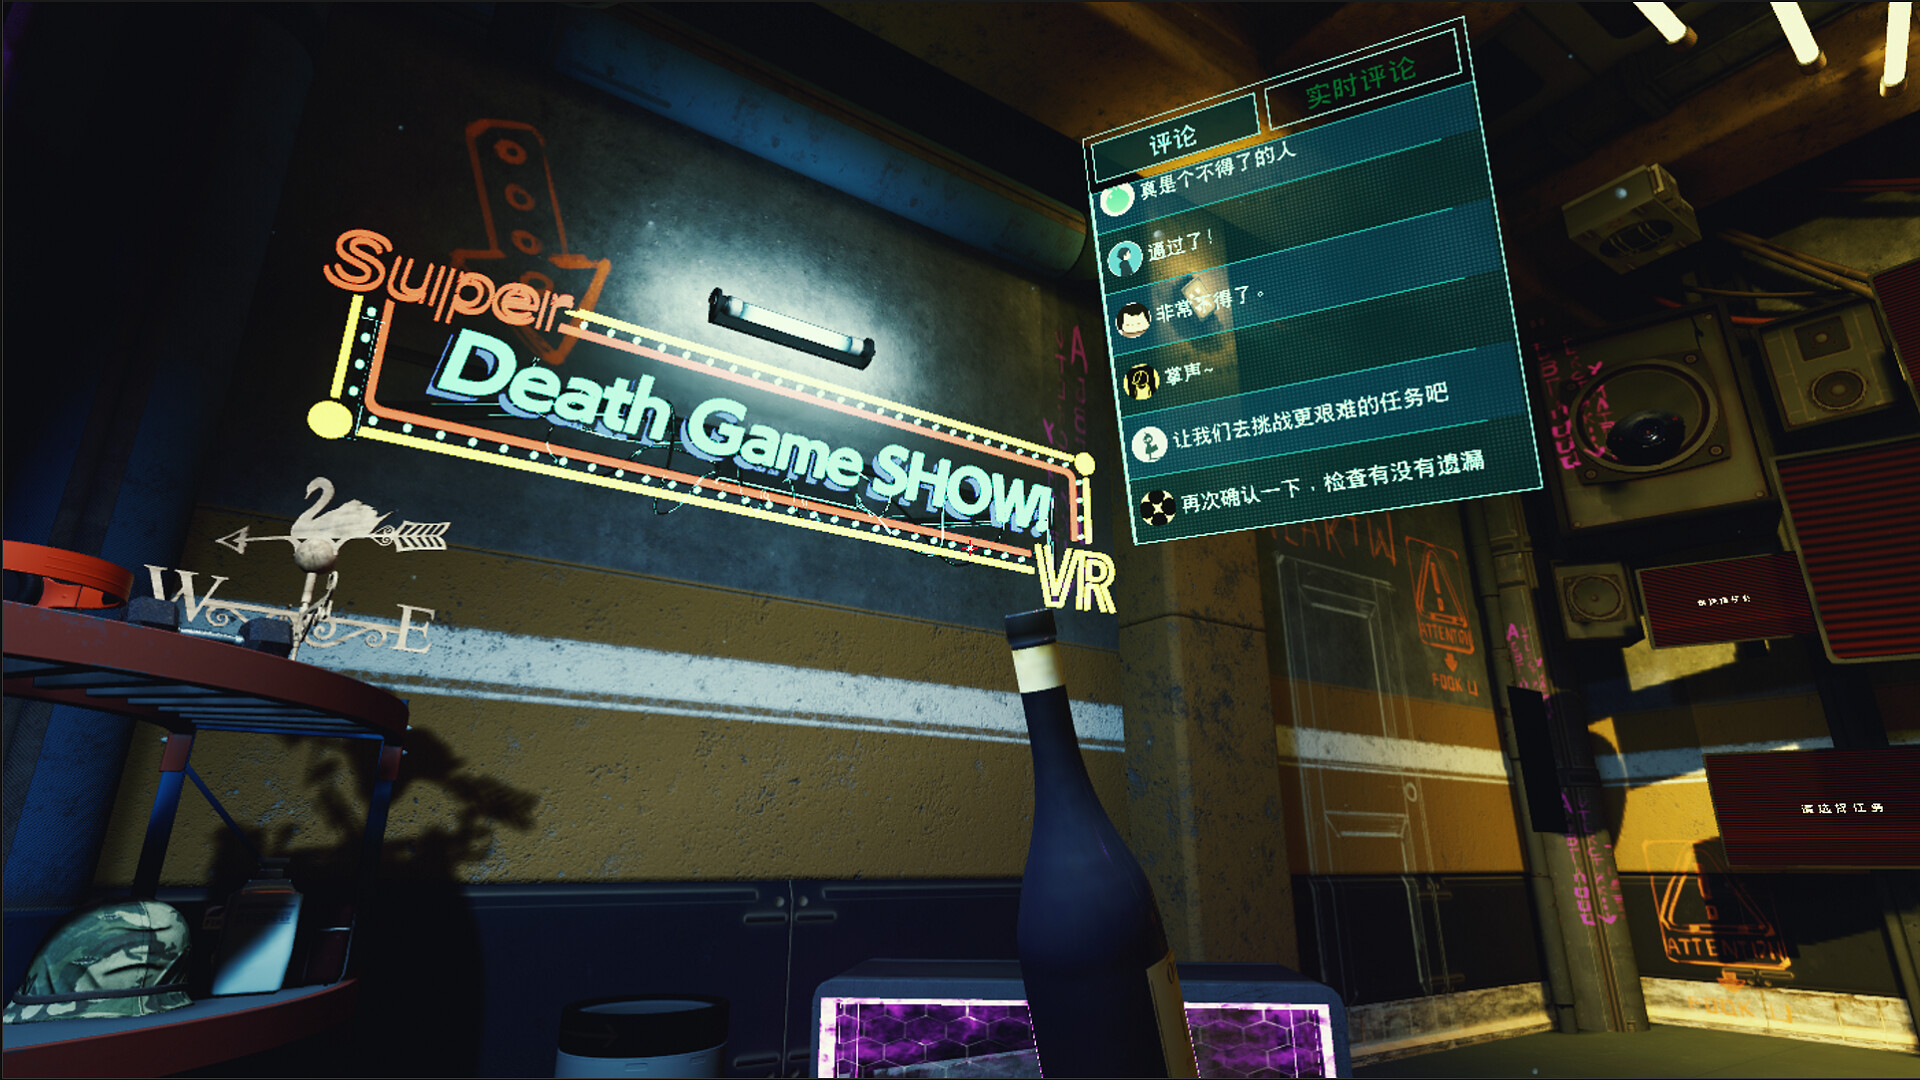 超级死亡游戏秀！(Super Death Game SHOW! VR)